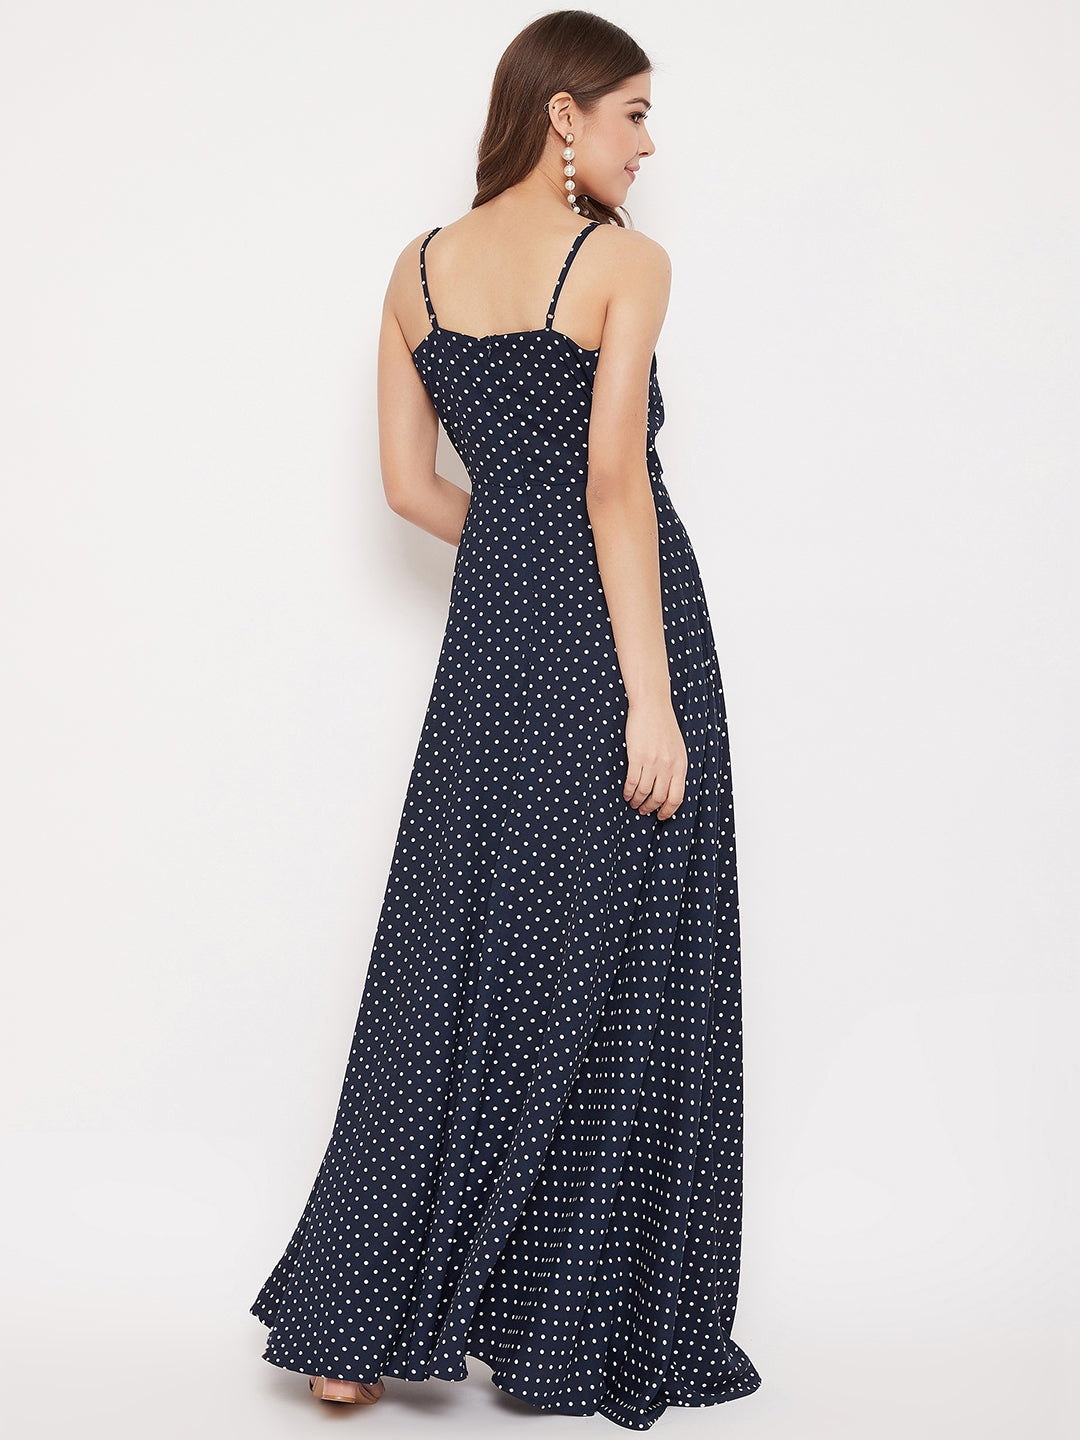 Berrylush Women Navy Blue & White Polka Dot Printed V-Neck Thigh-High Slit Flared Maxi Dress